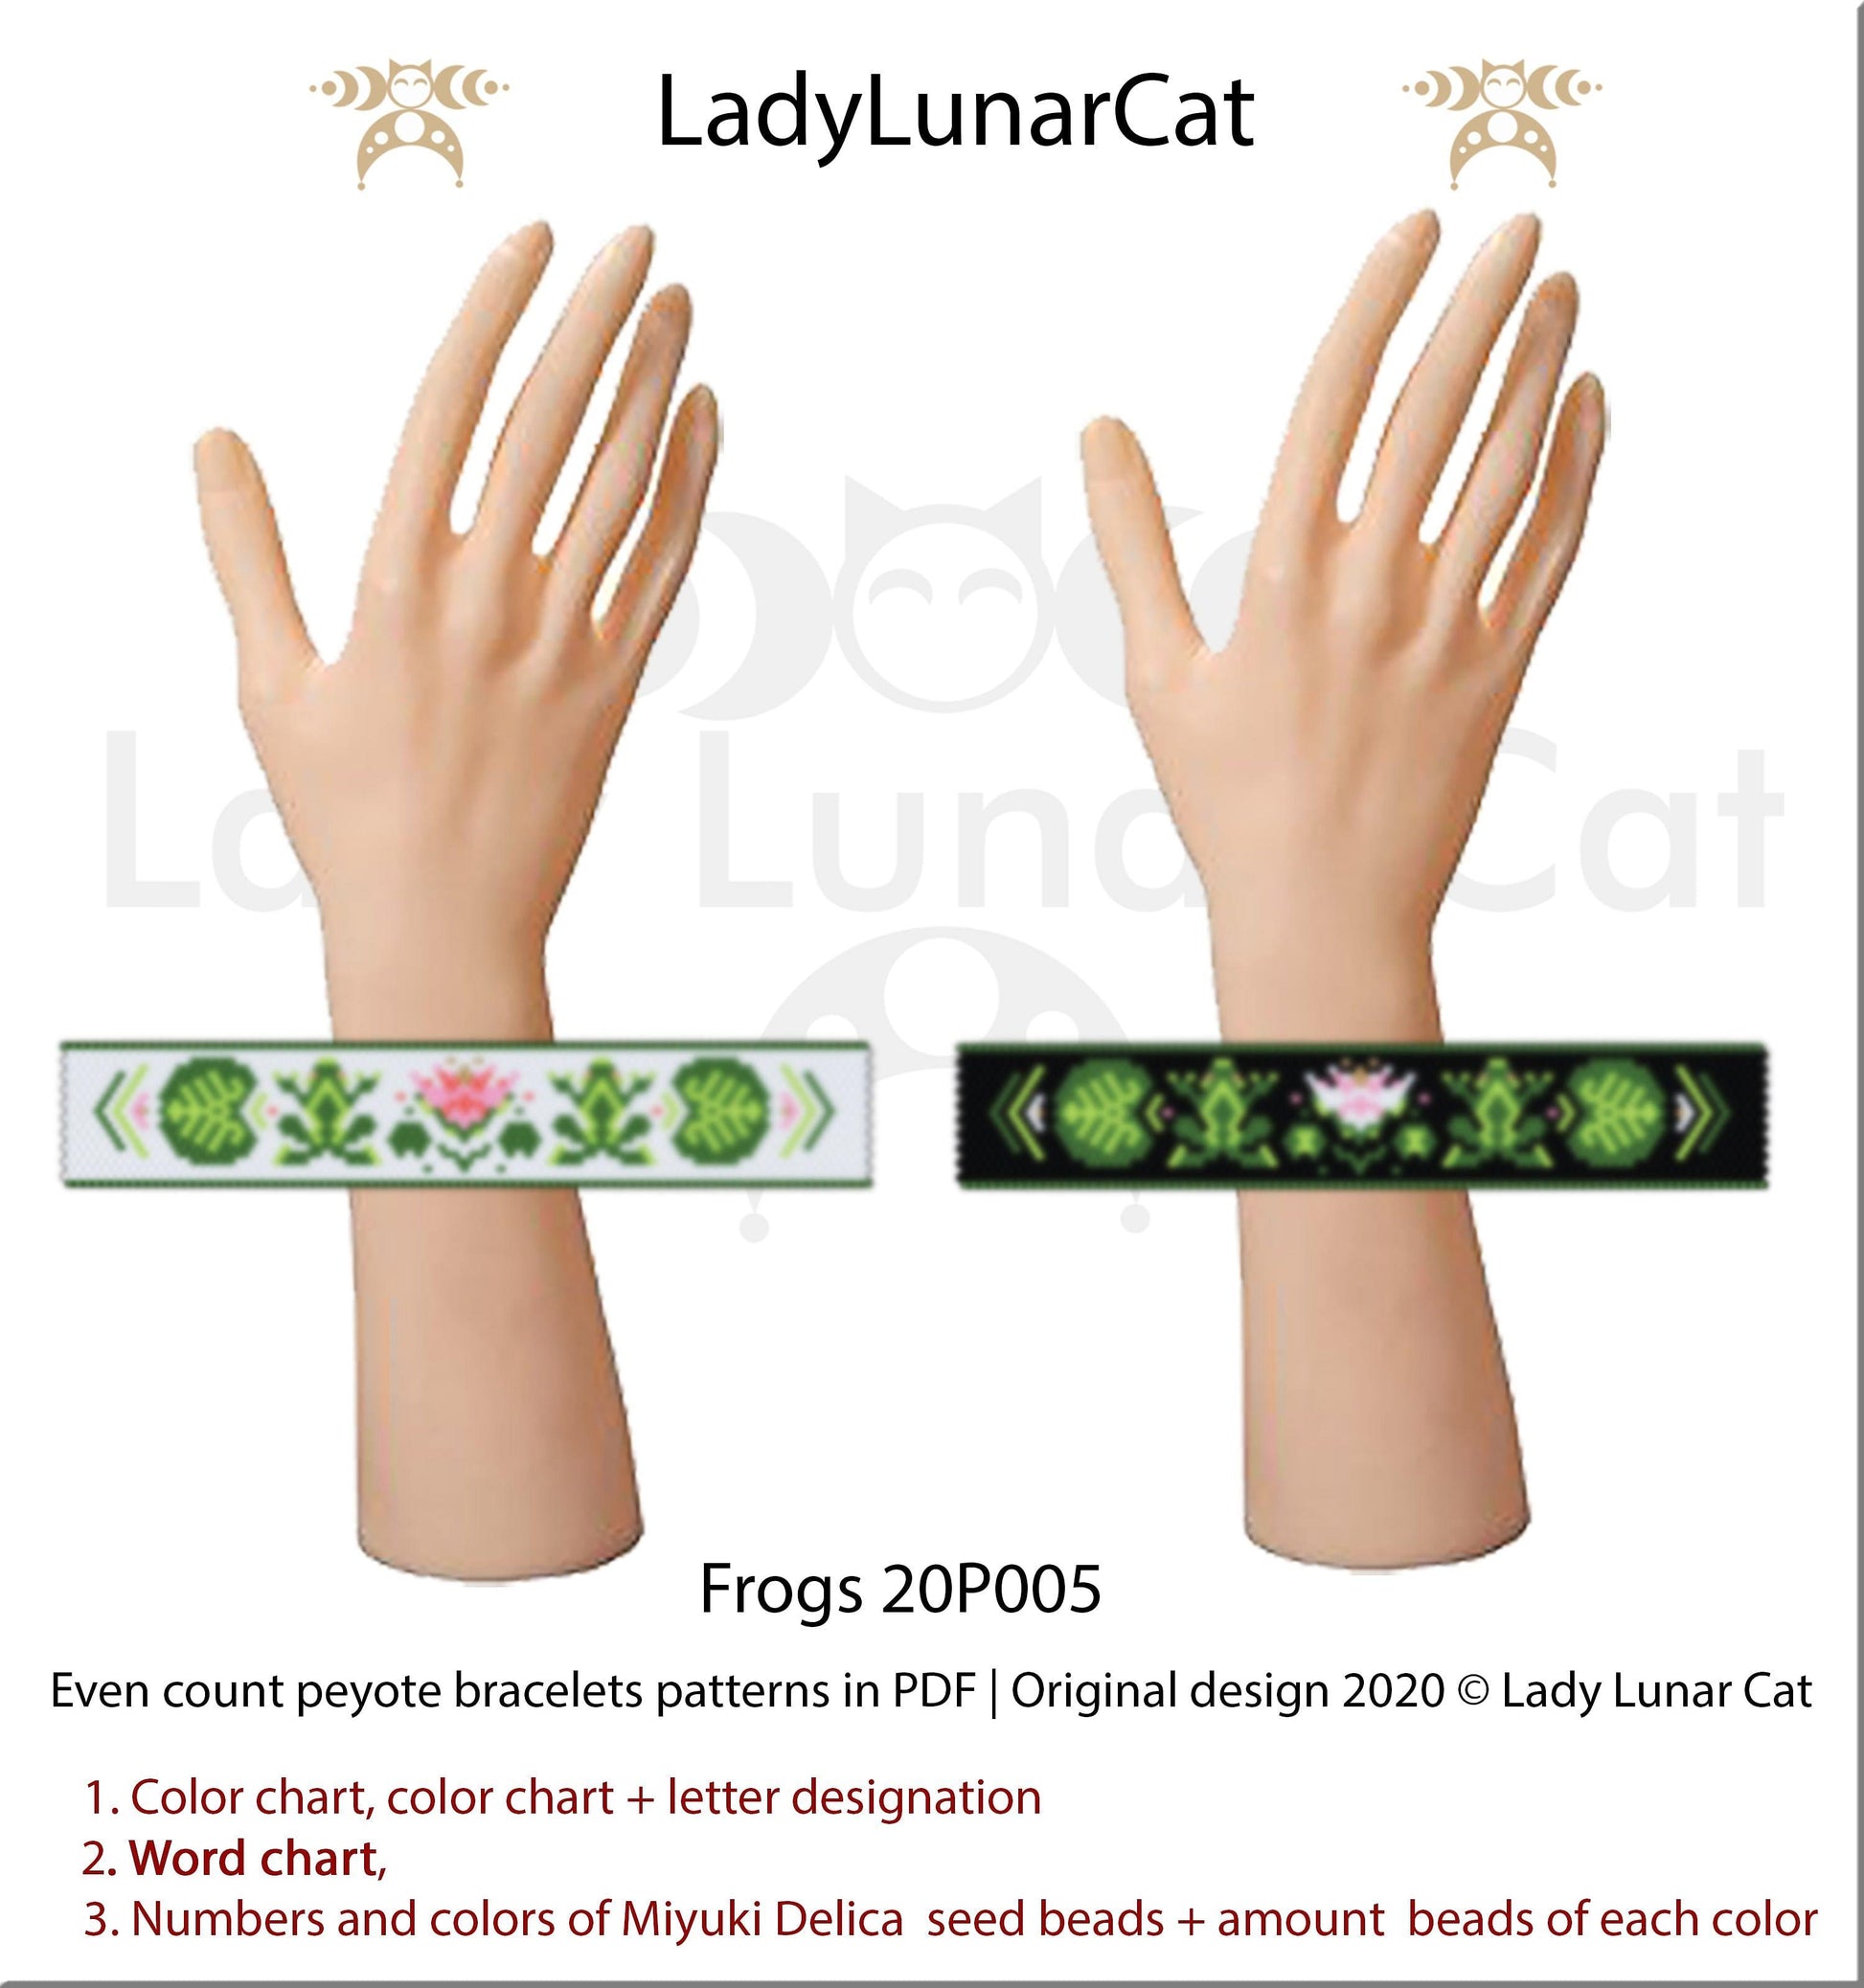 Even count peyote bracelet pattern for beading Frogs 20P005 LadyLunarCat